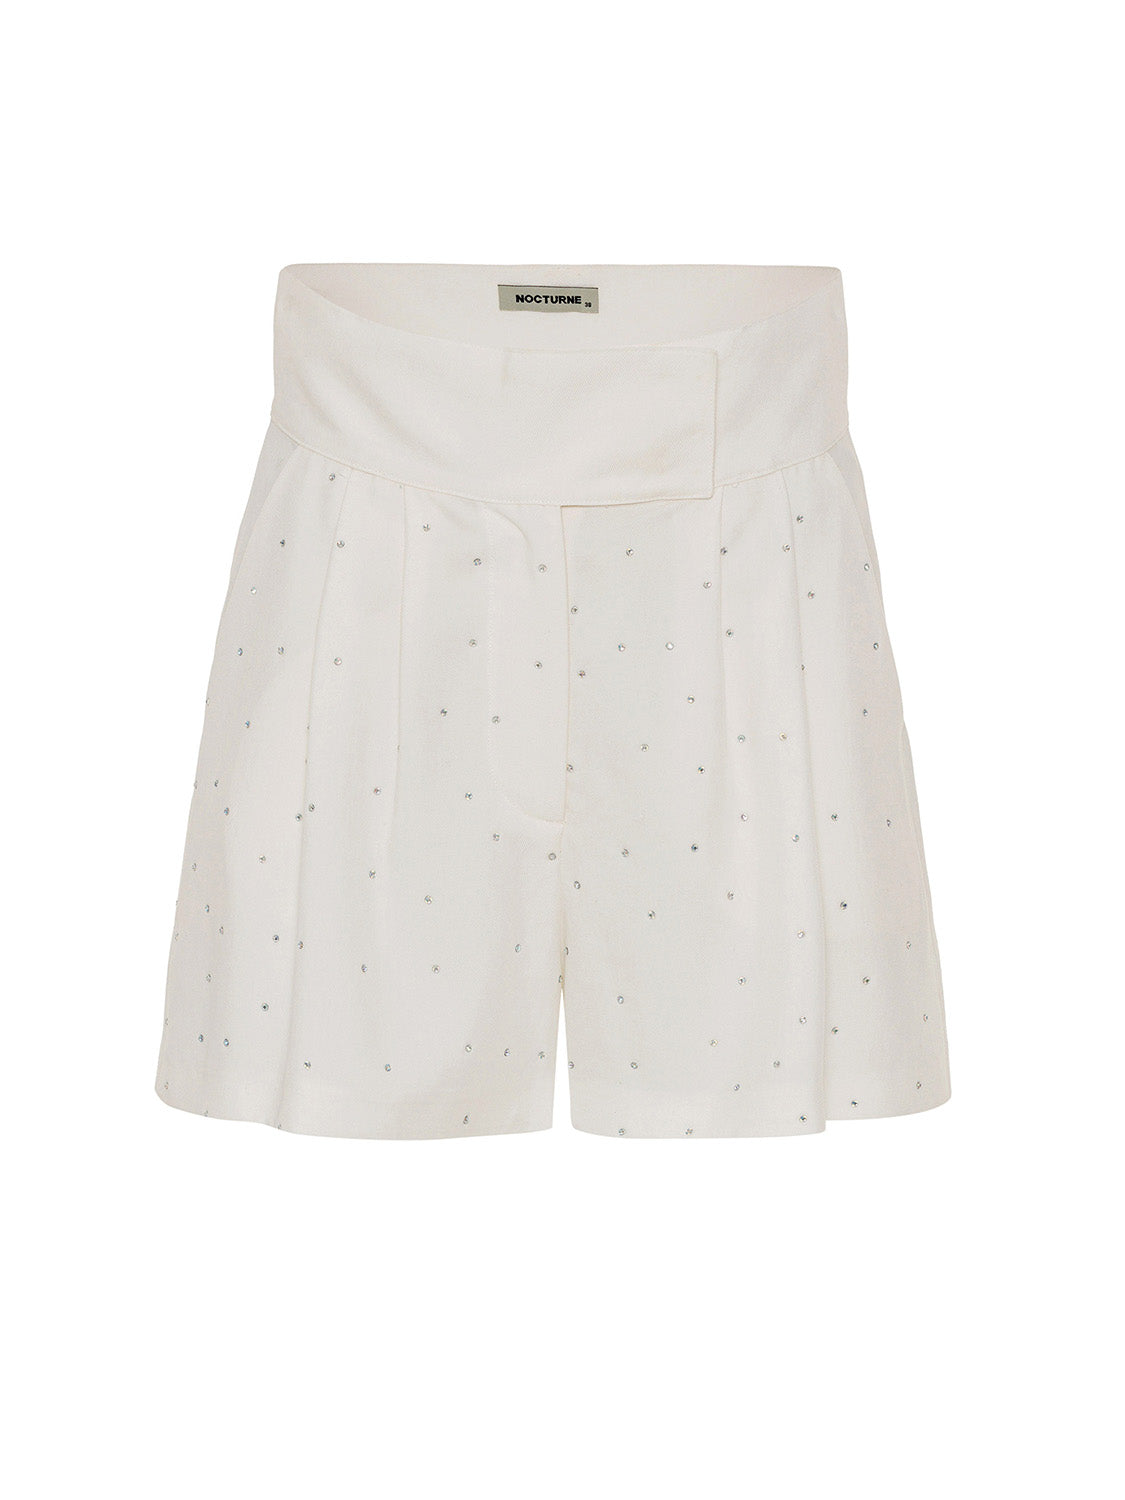 White Embellished Shorts Small Nocturne